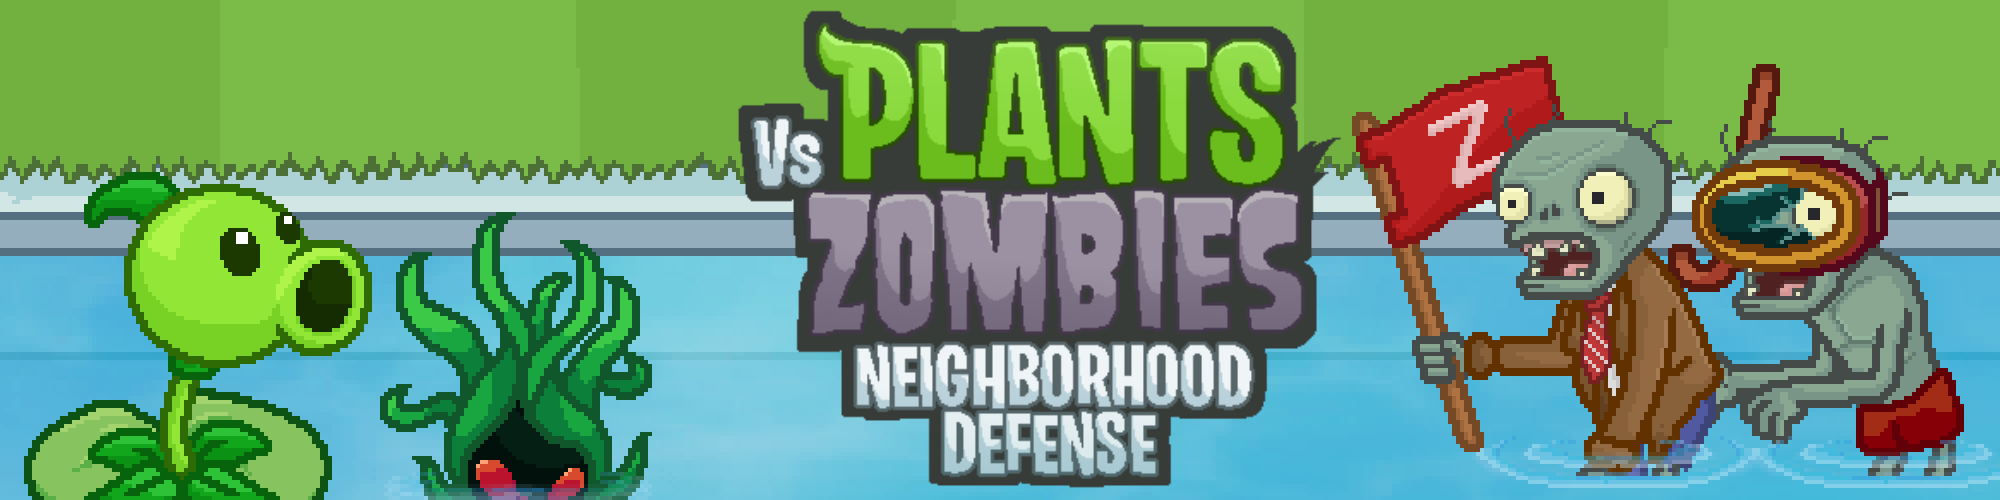 Plants vs Zombies Neighborhood Defense